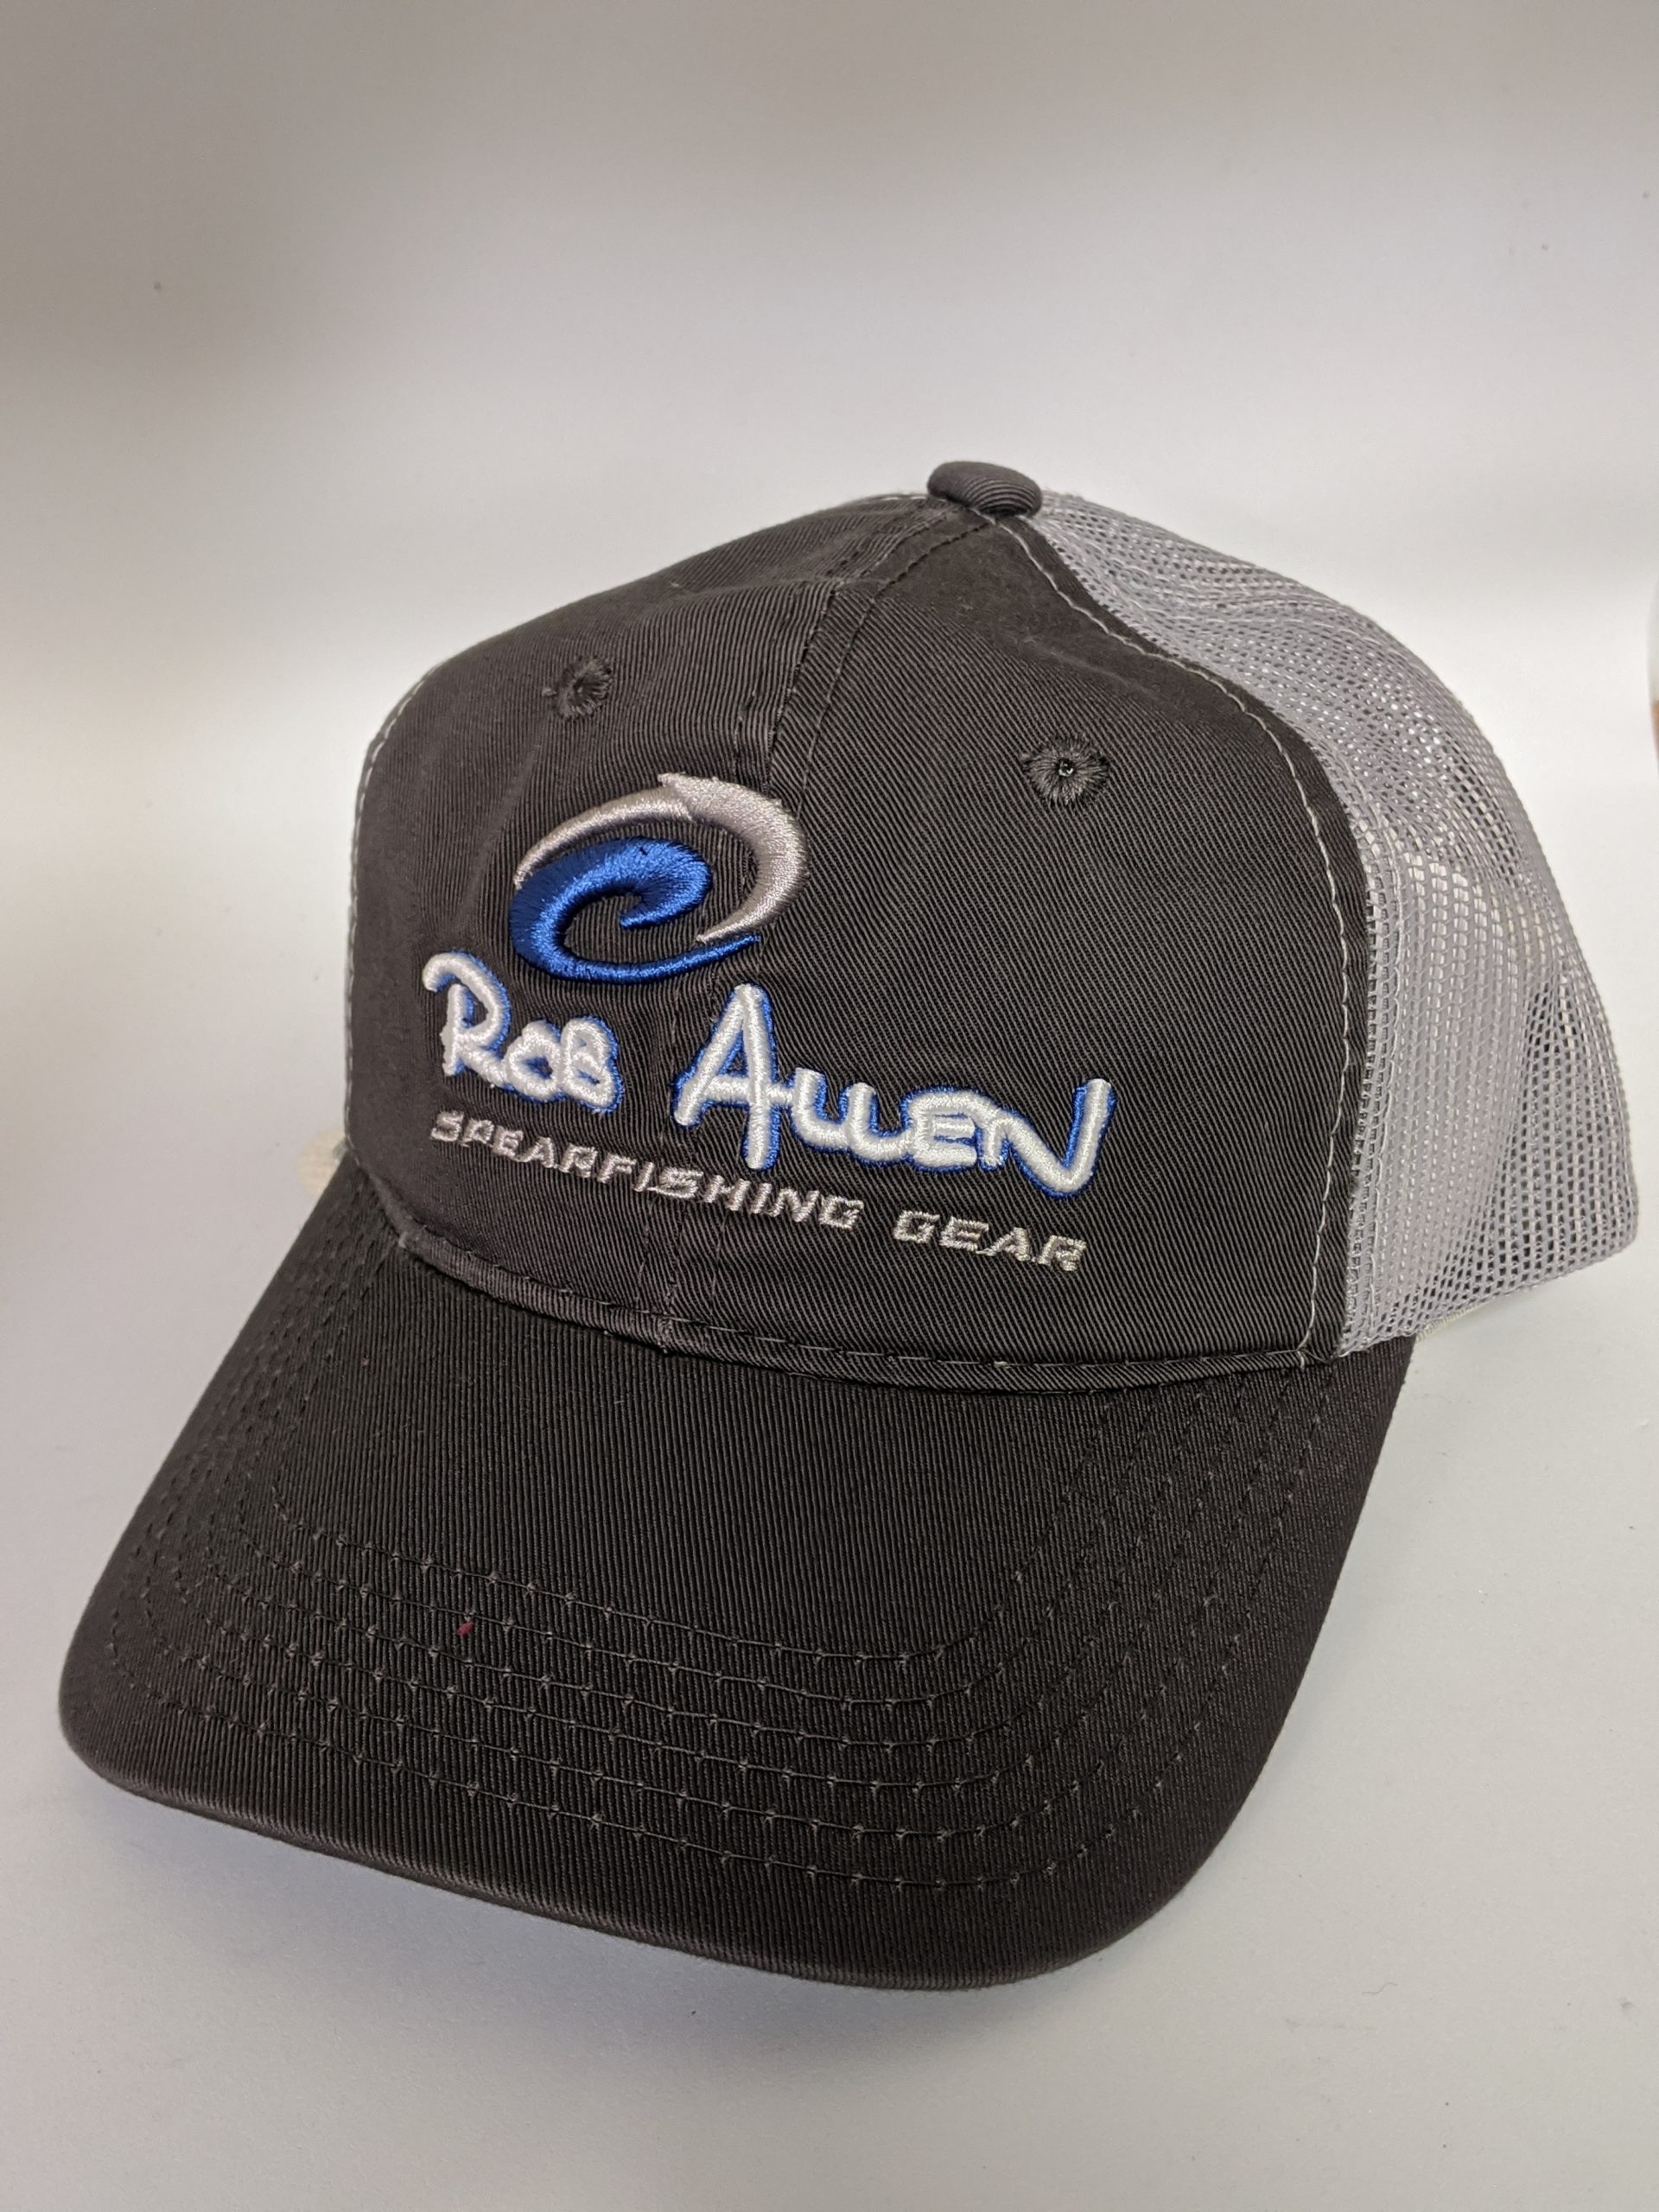 Rob Allen spearfishing diving Basball Cap Blue 